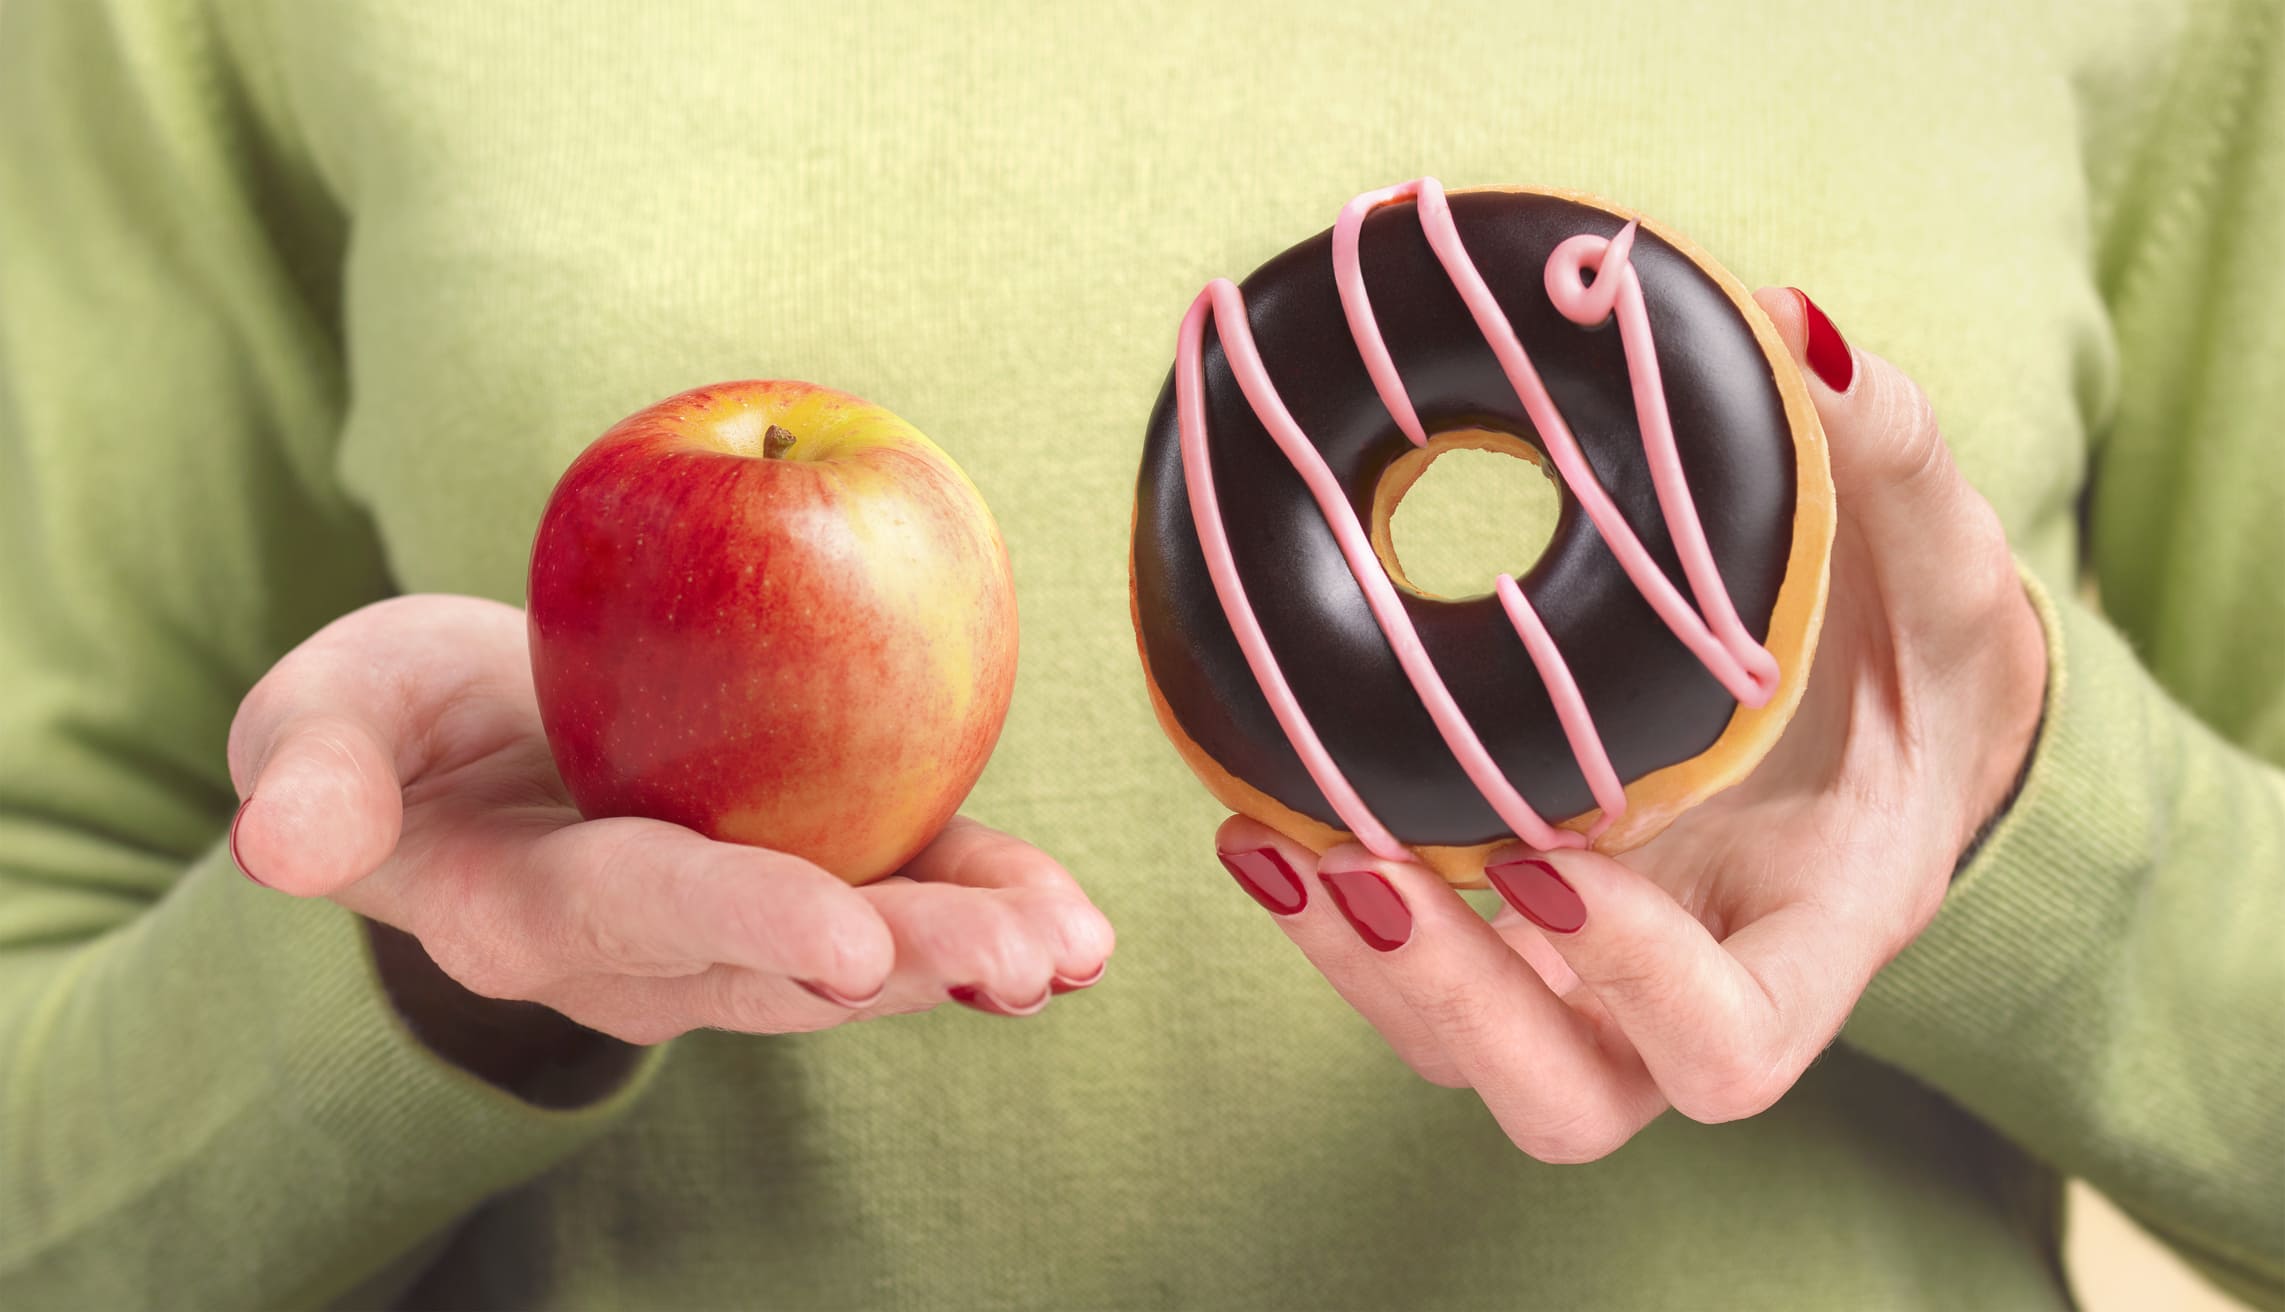 Una chica debate sobre si comerse un donut o una manzana.